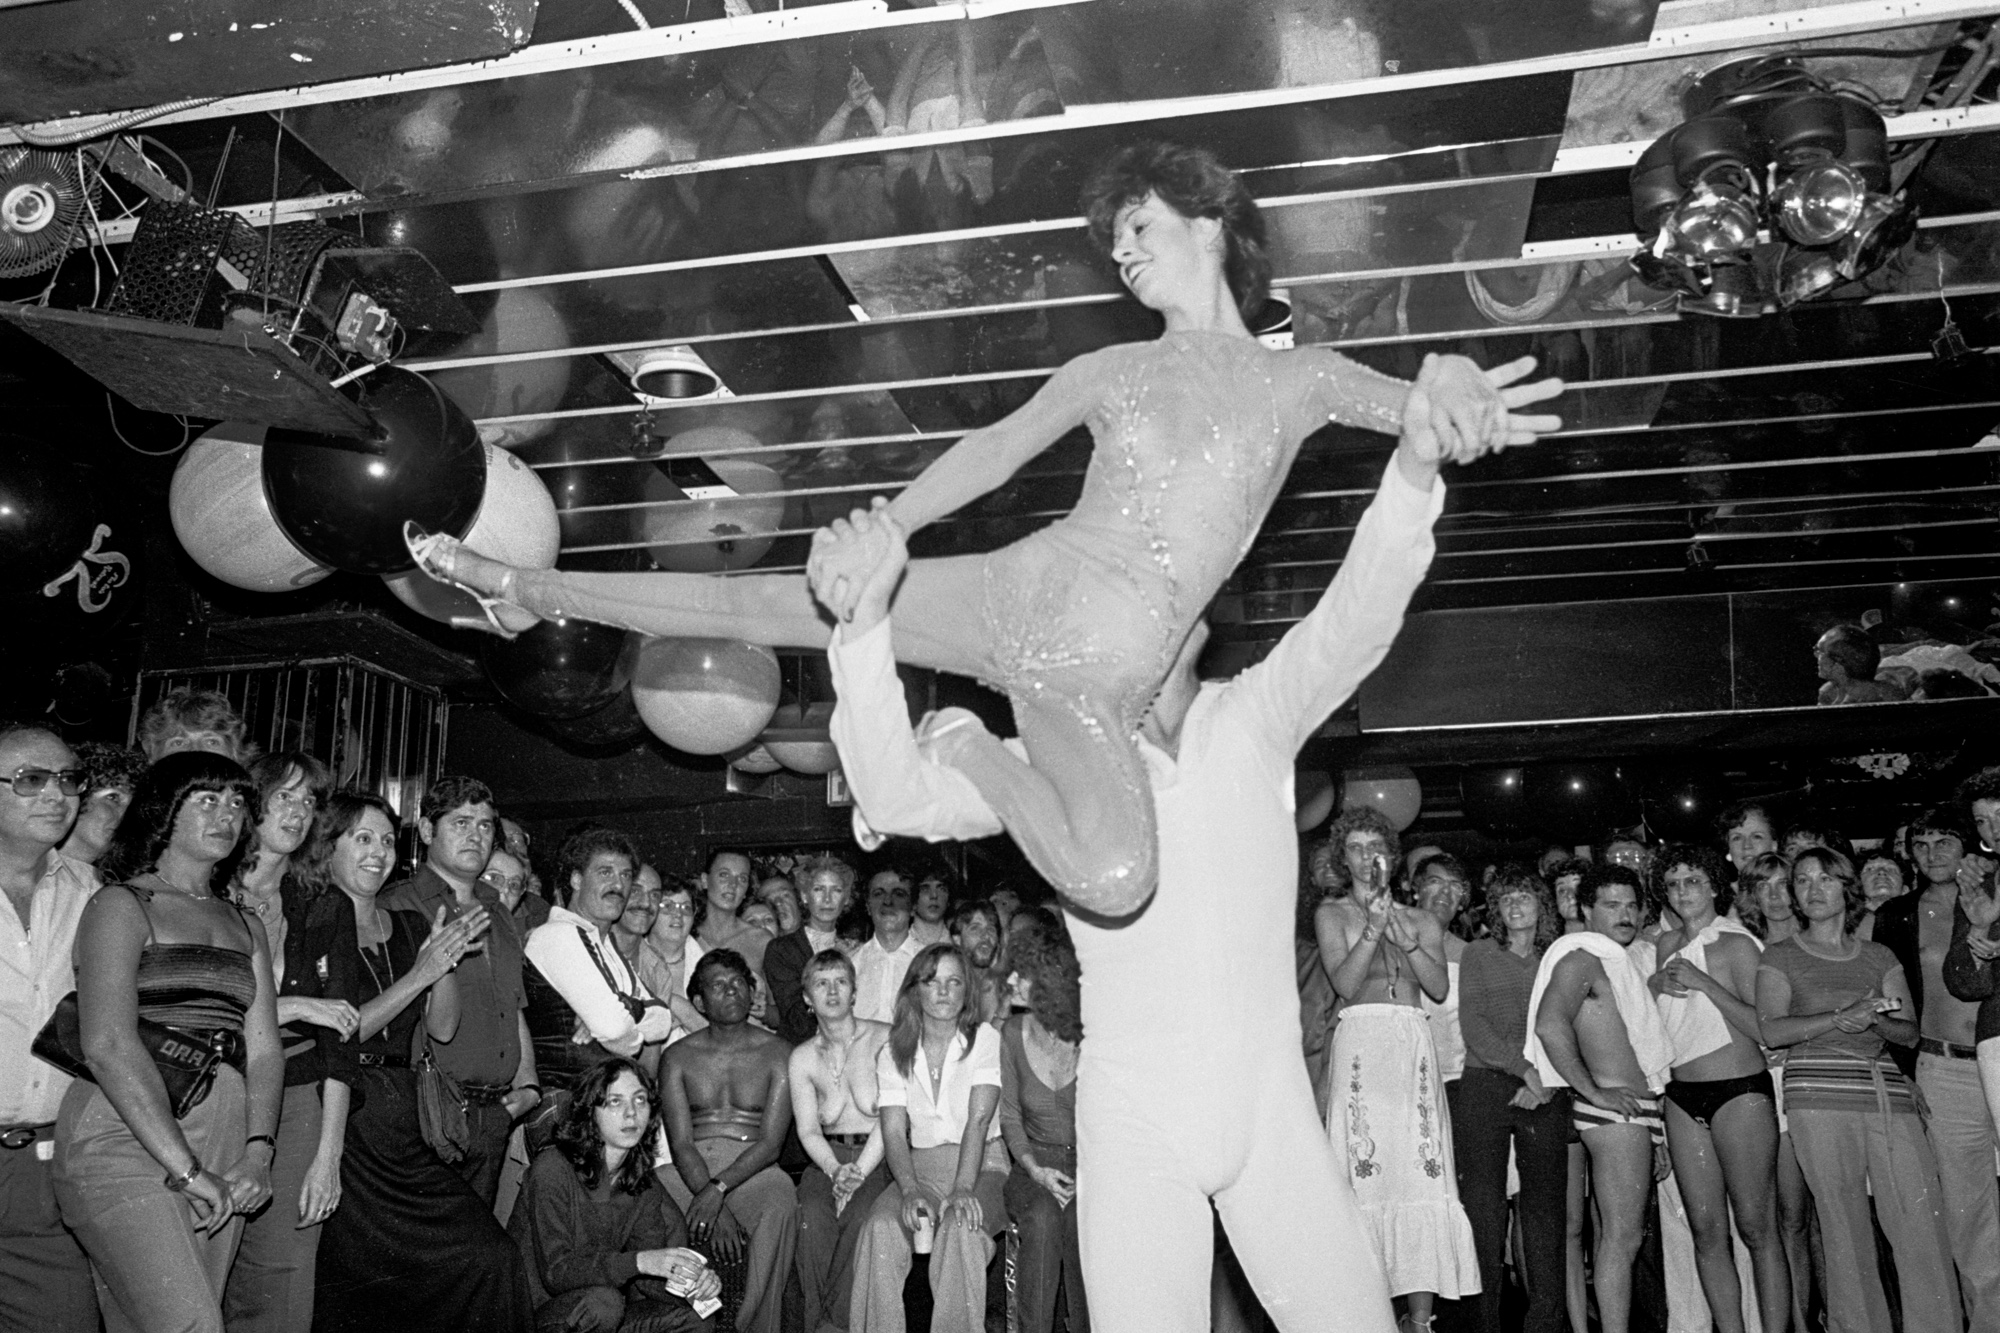 A wild ride through a 70s New York sex club image